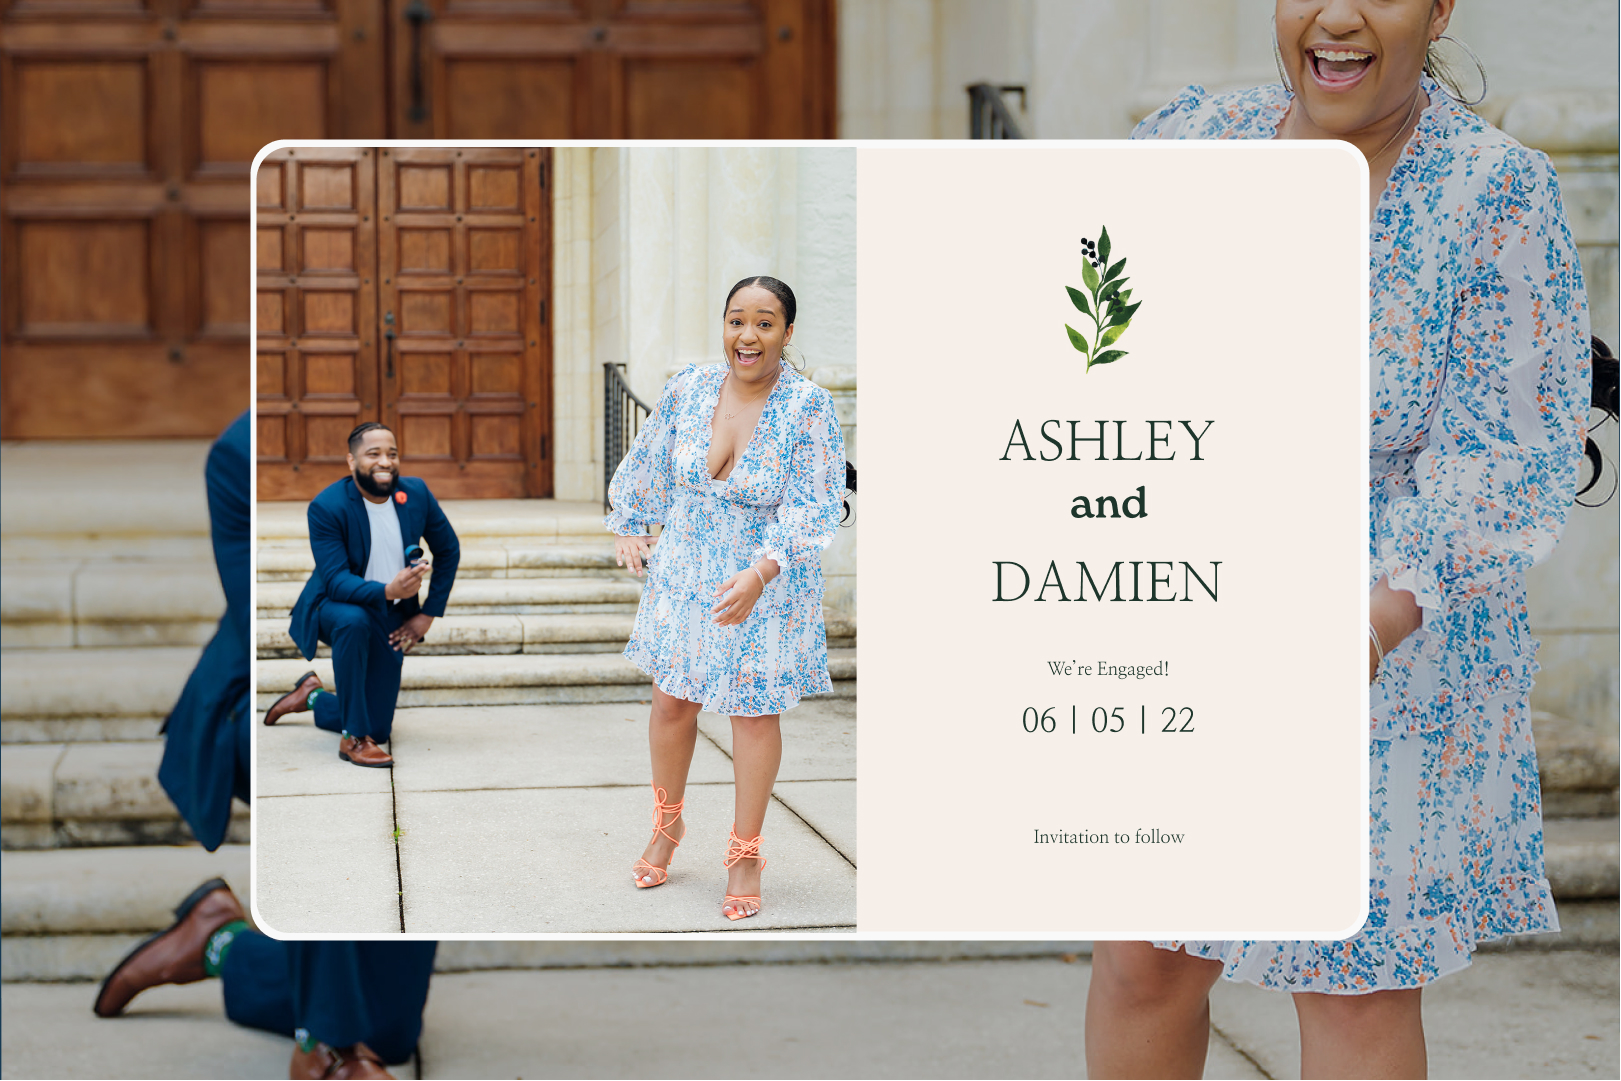 Ashley & Damien — The Day it All Began